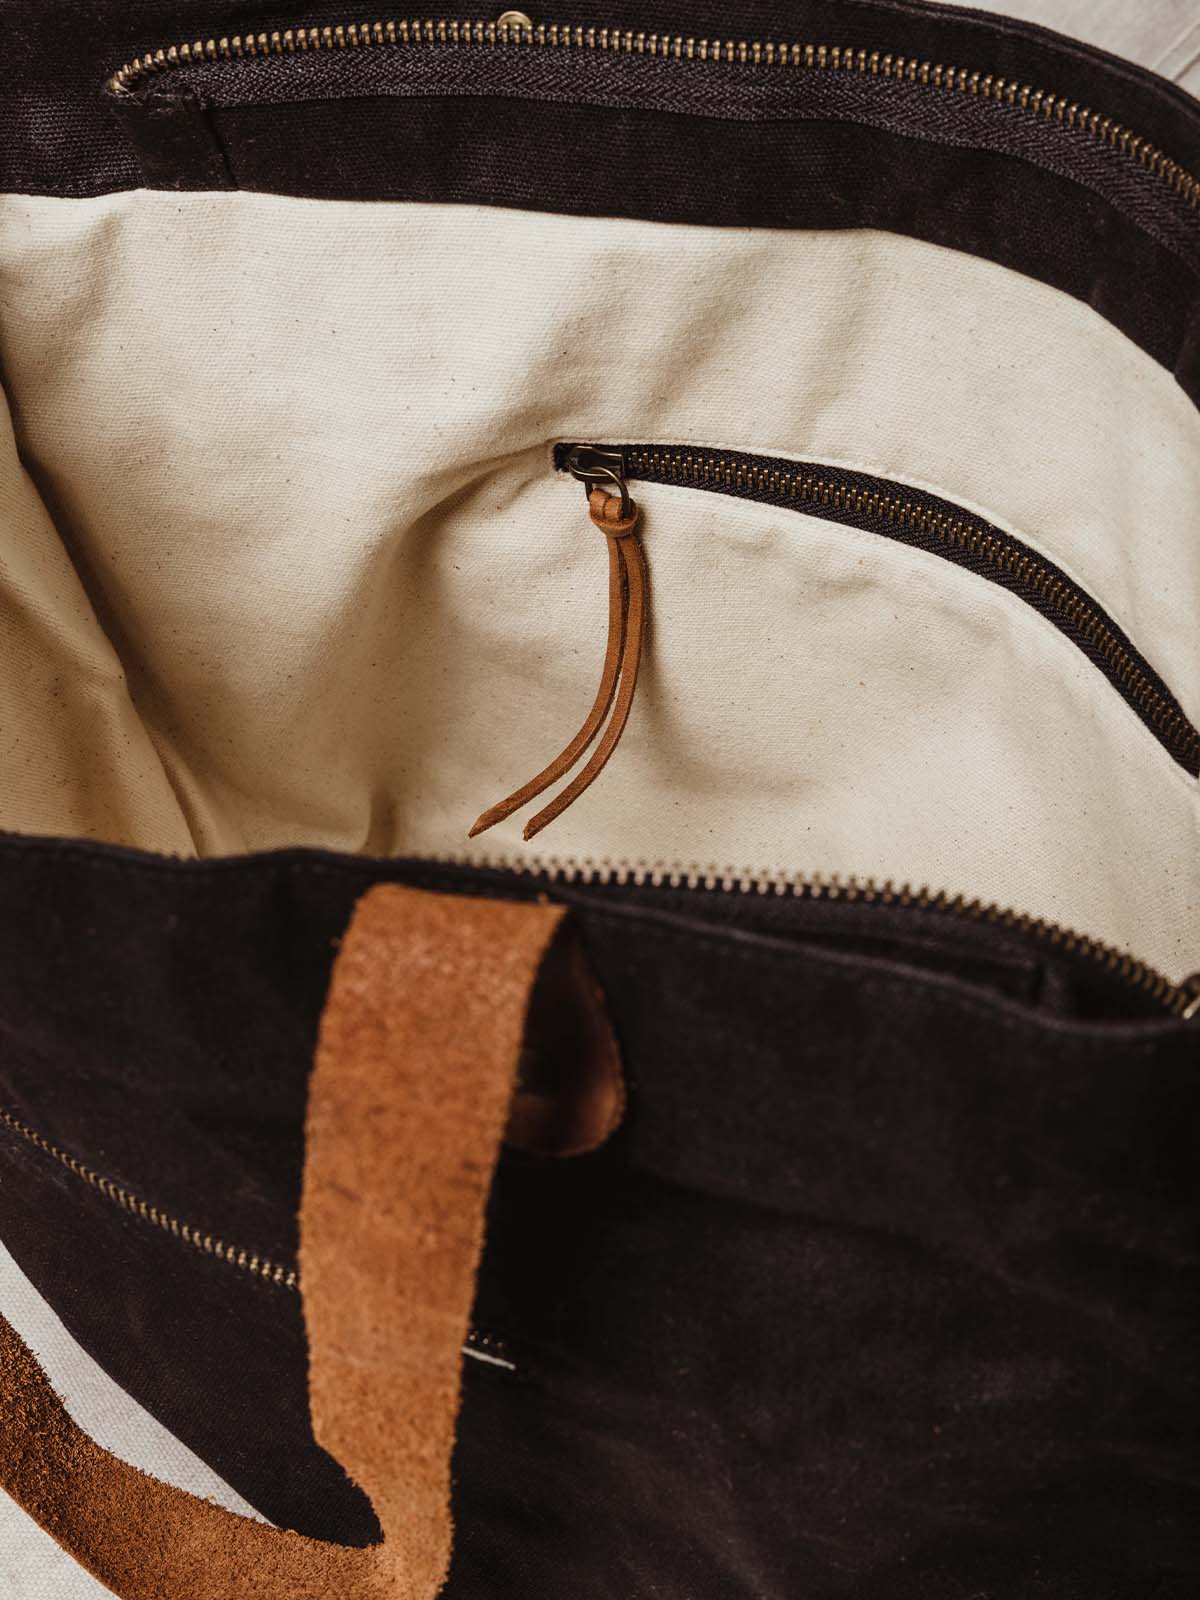 Closeup of internal zipper and quality fabric